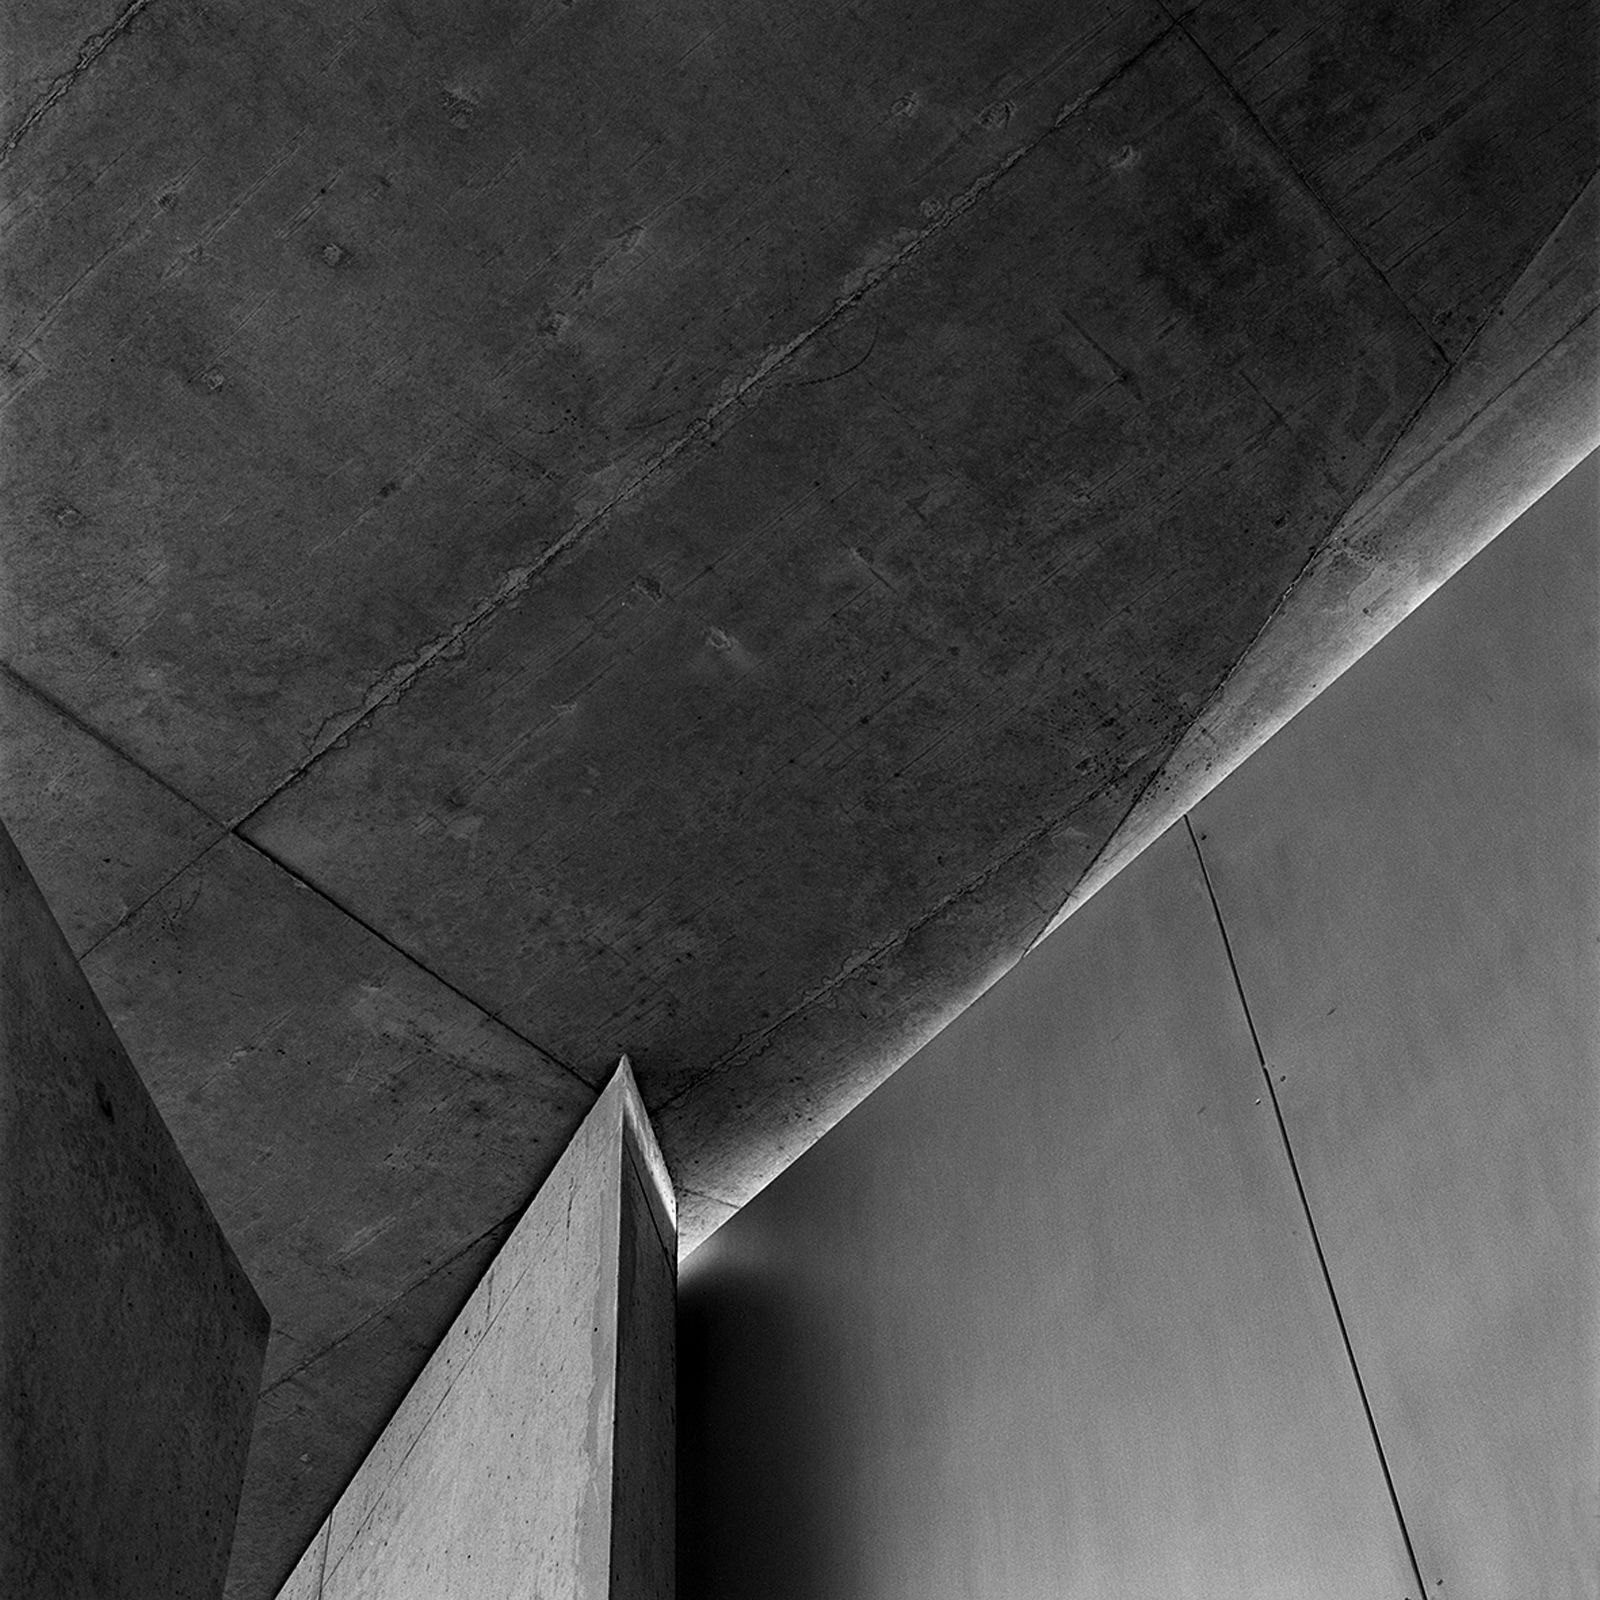 © Hélène Binet 'Vitra Firestation 04 (Architecture by Zaha Hadid)' courtesy ammann//gallery